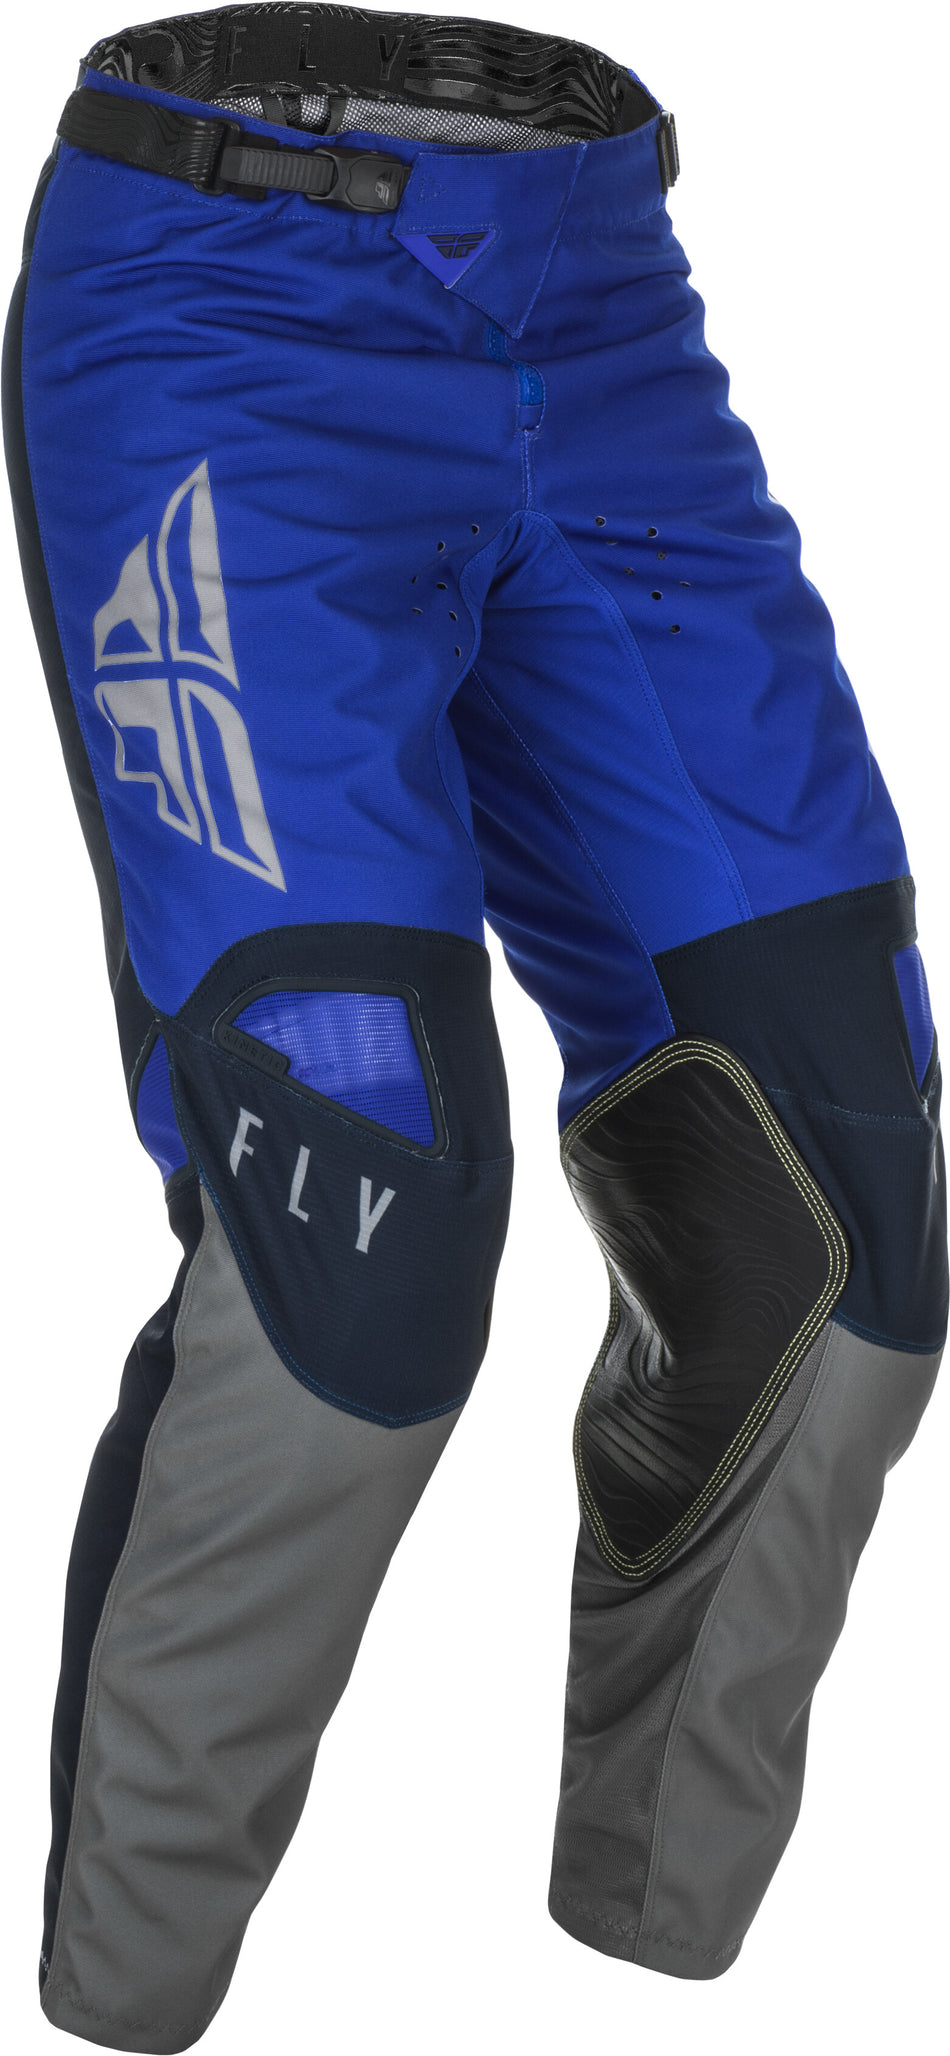 FLY RACING Kinetic K121 Pants Blue/Navy/Grey Sz 28 374-43128